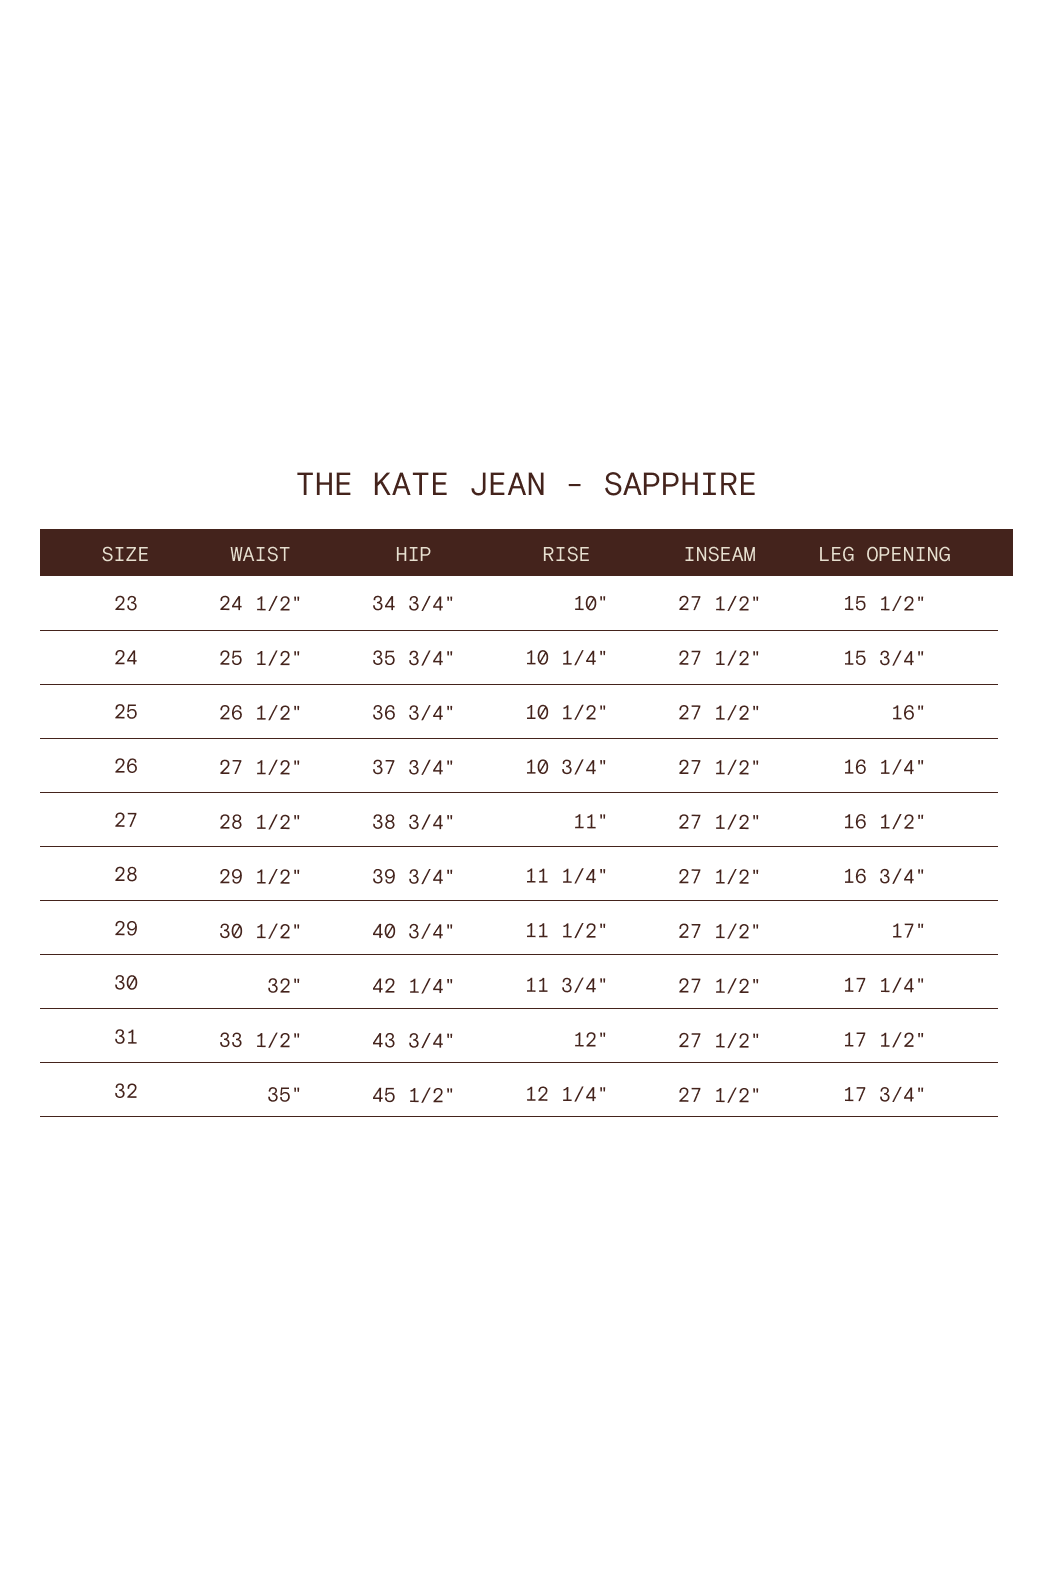 The Kate Jean - Sapphire